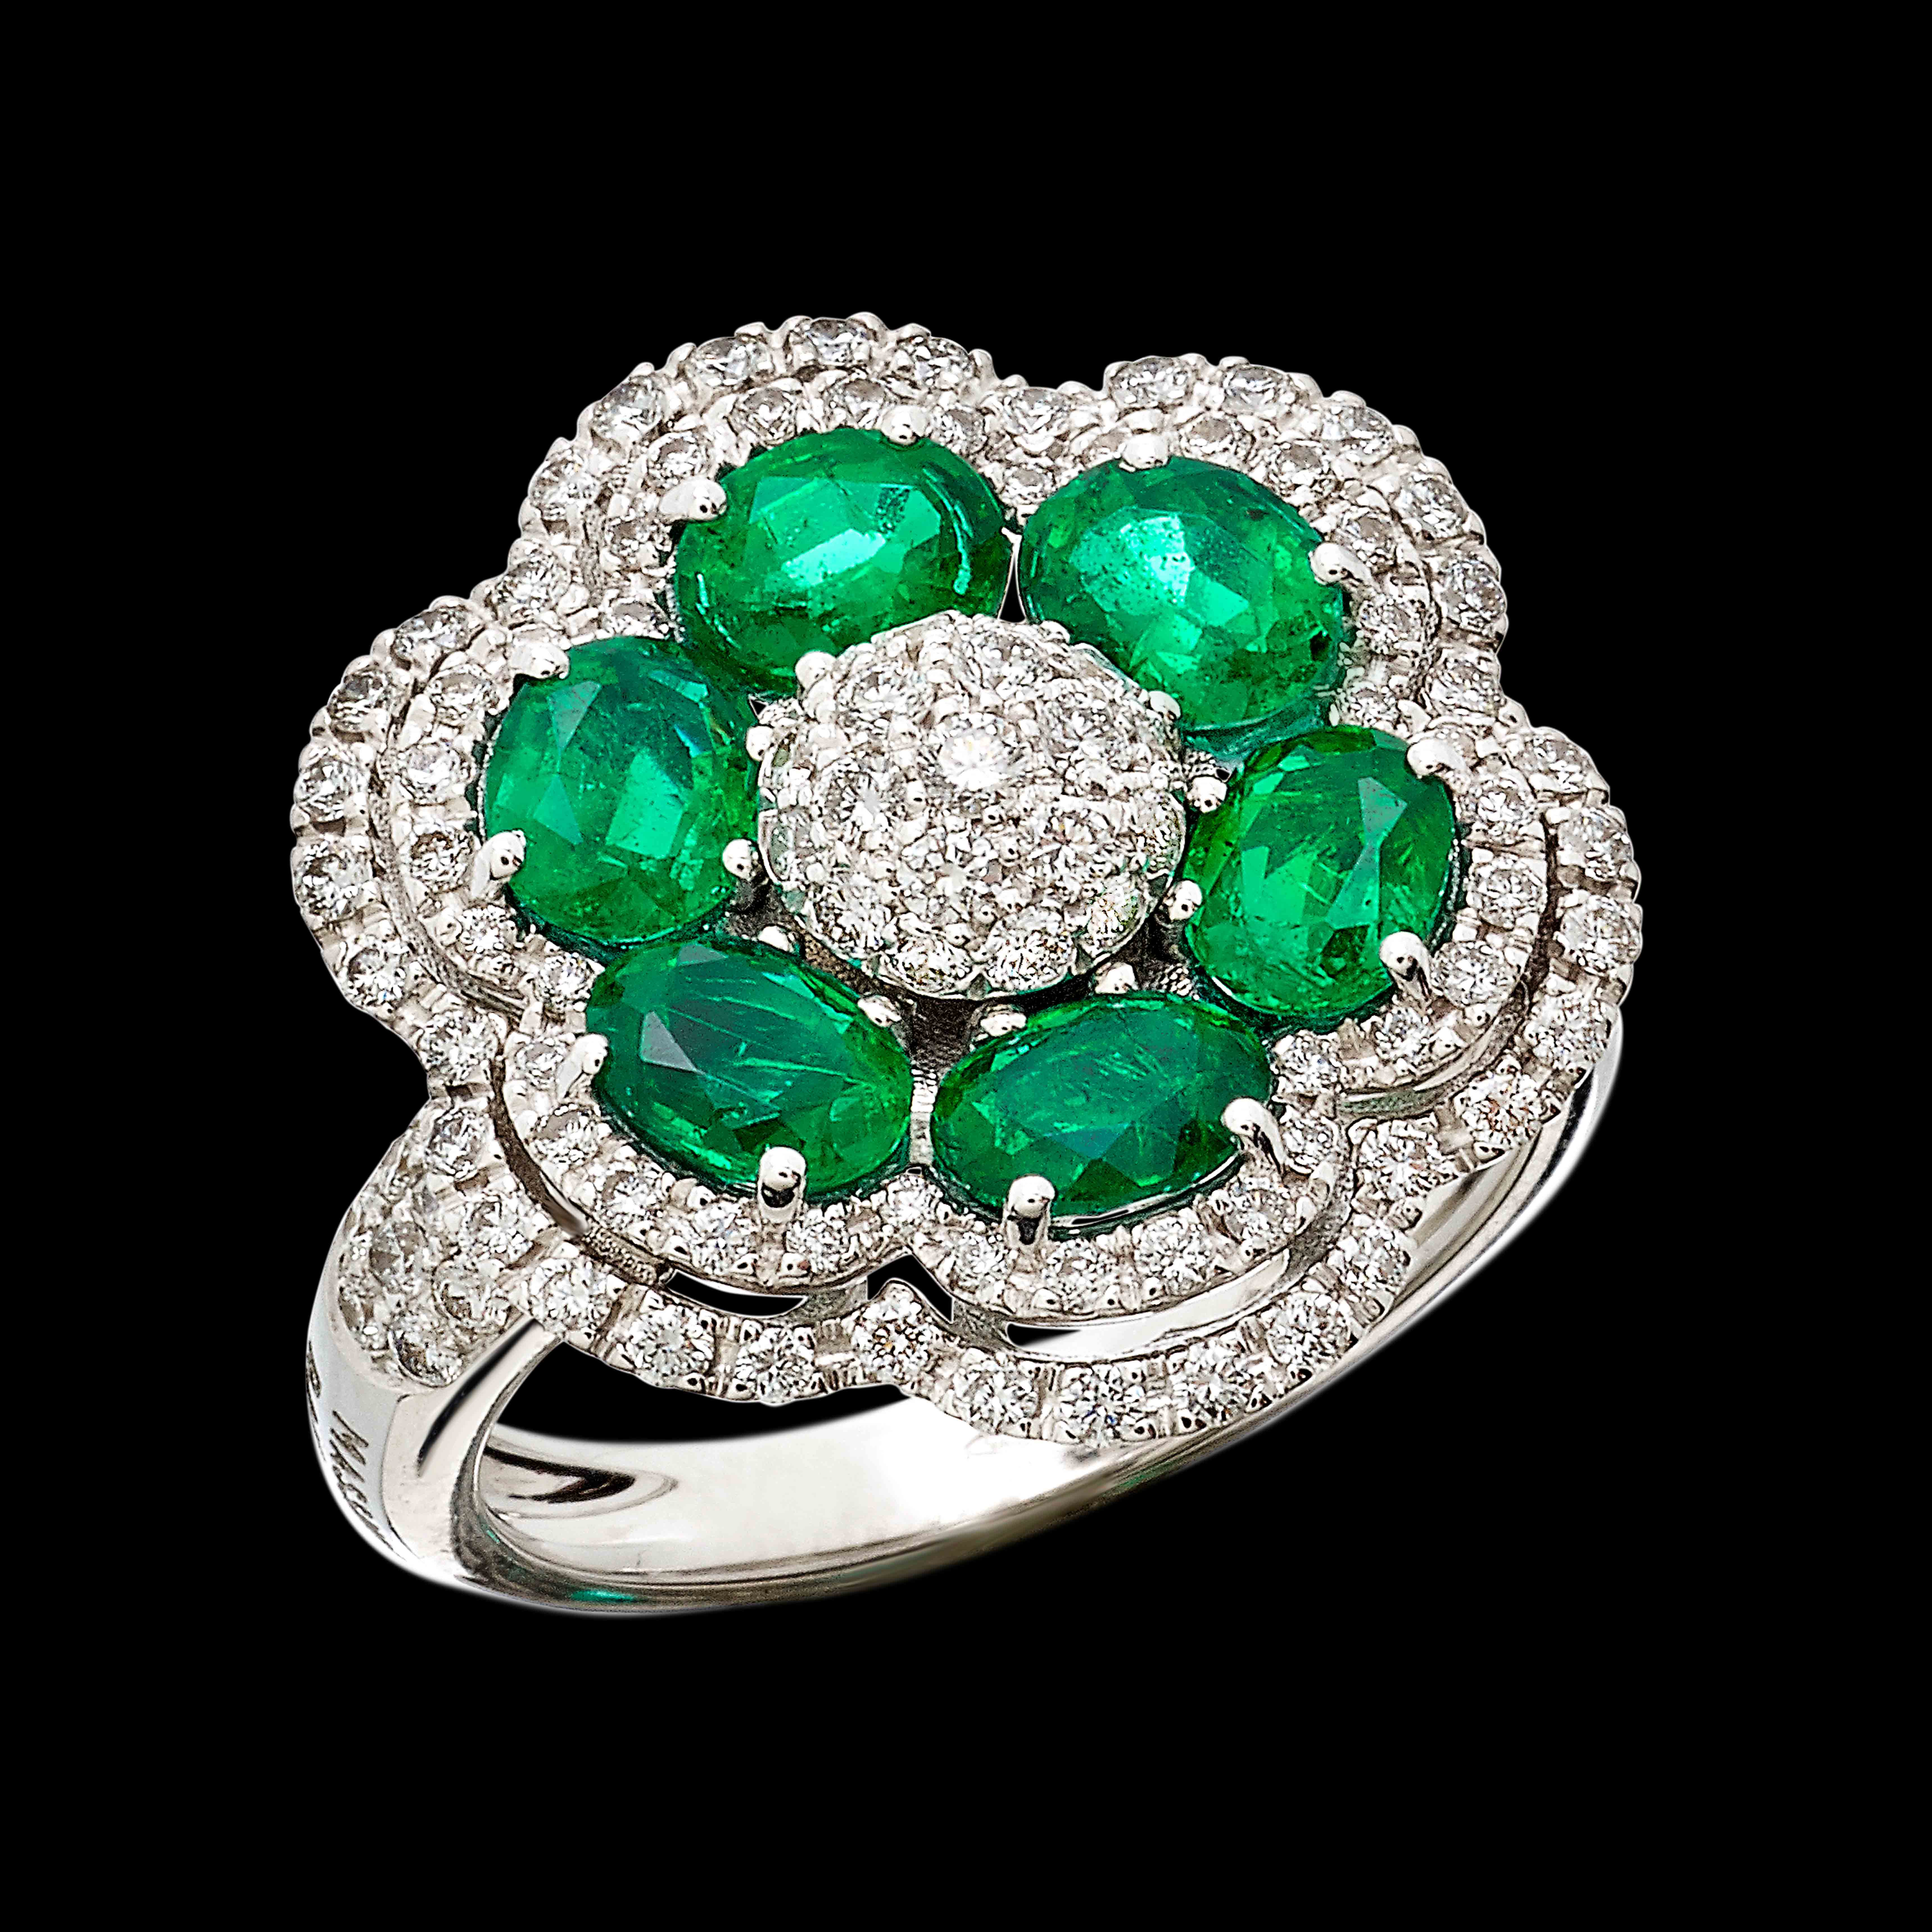 Massimo Raiteri exclusive jewellery diamonds diamanti anelli ring jewelery jewel ruby emerald sapphires diamonds rubini smeraldi zaffiiri diamanti flower fiori high